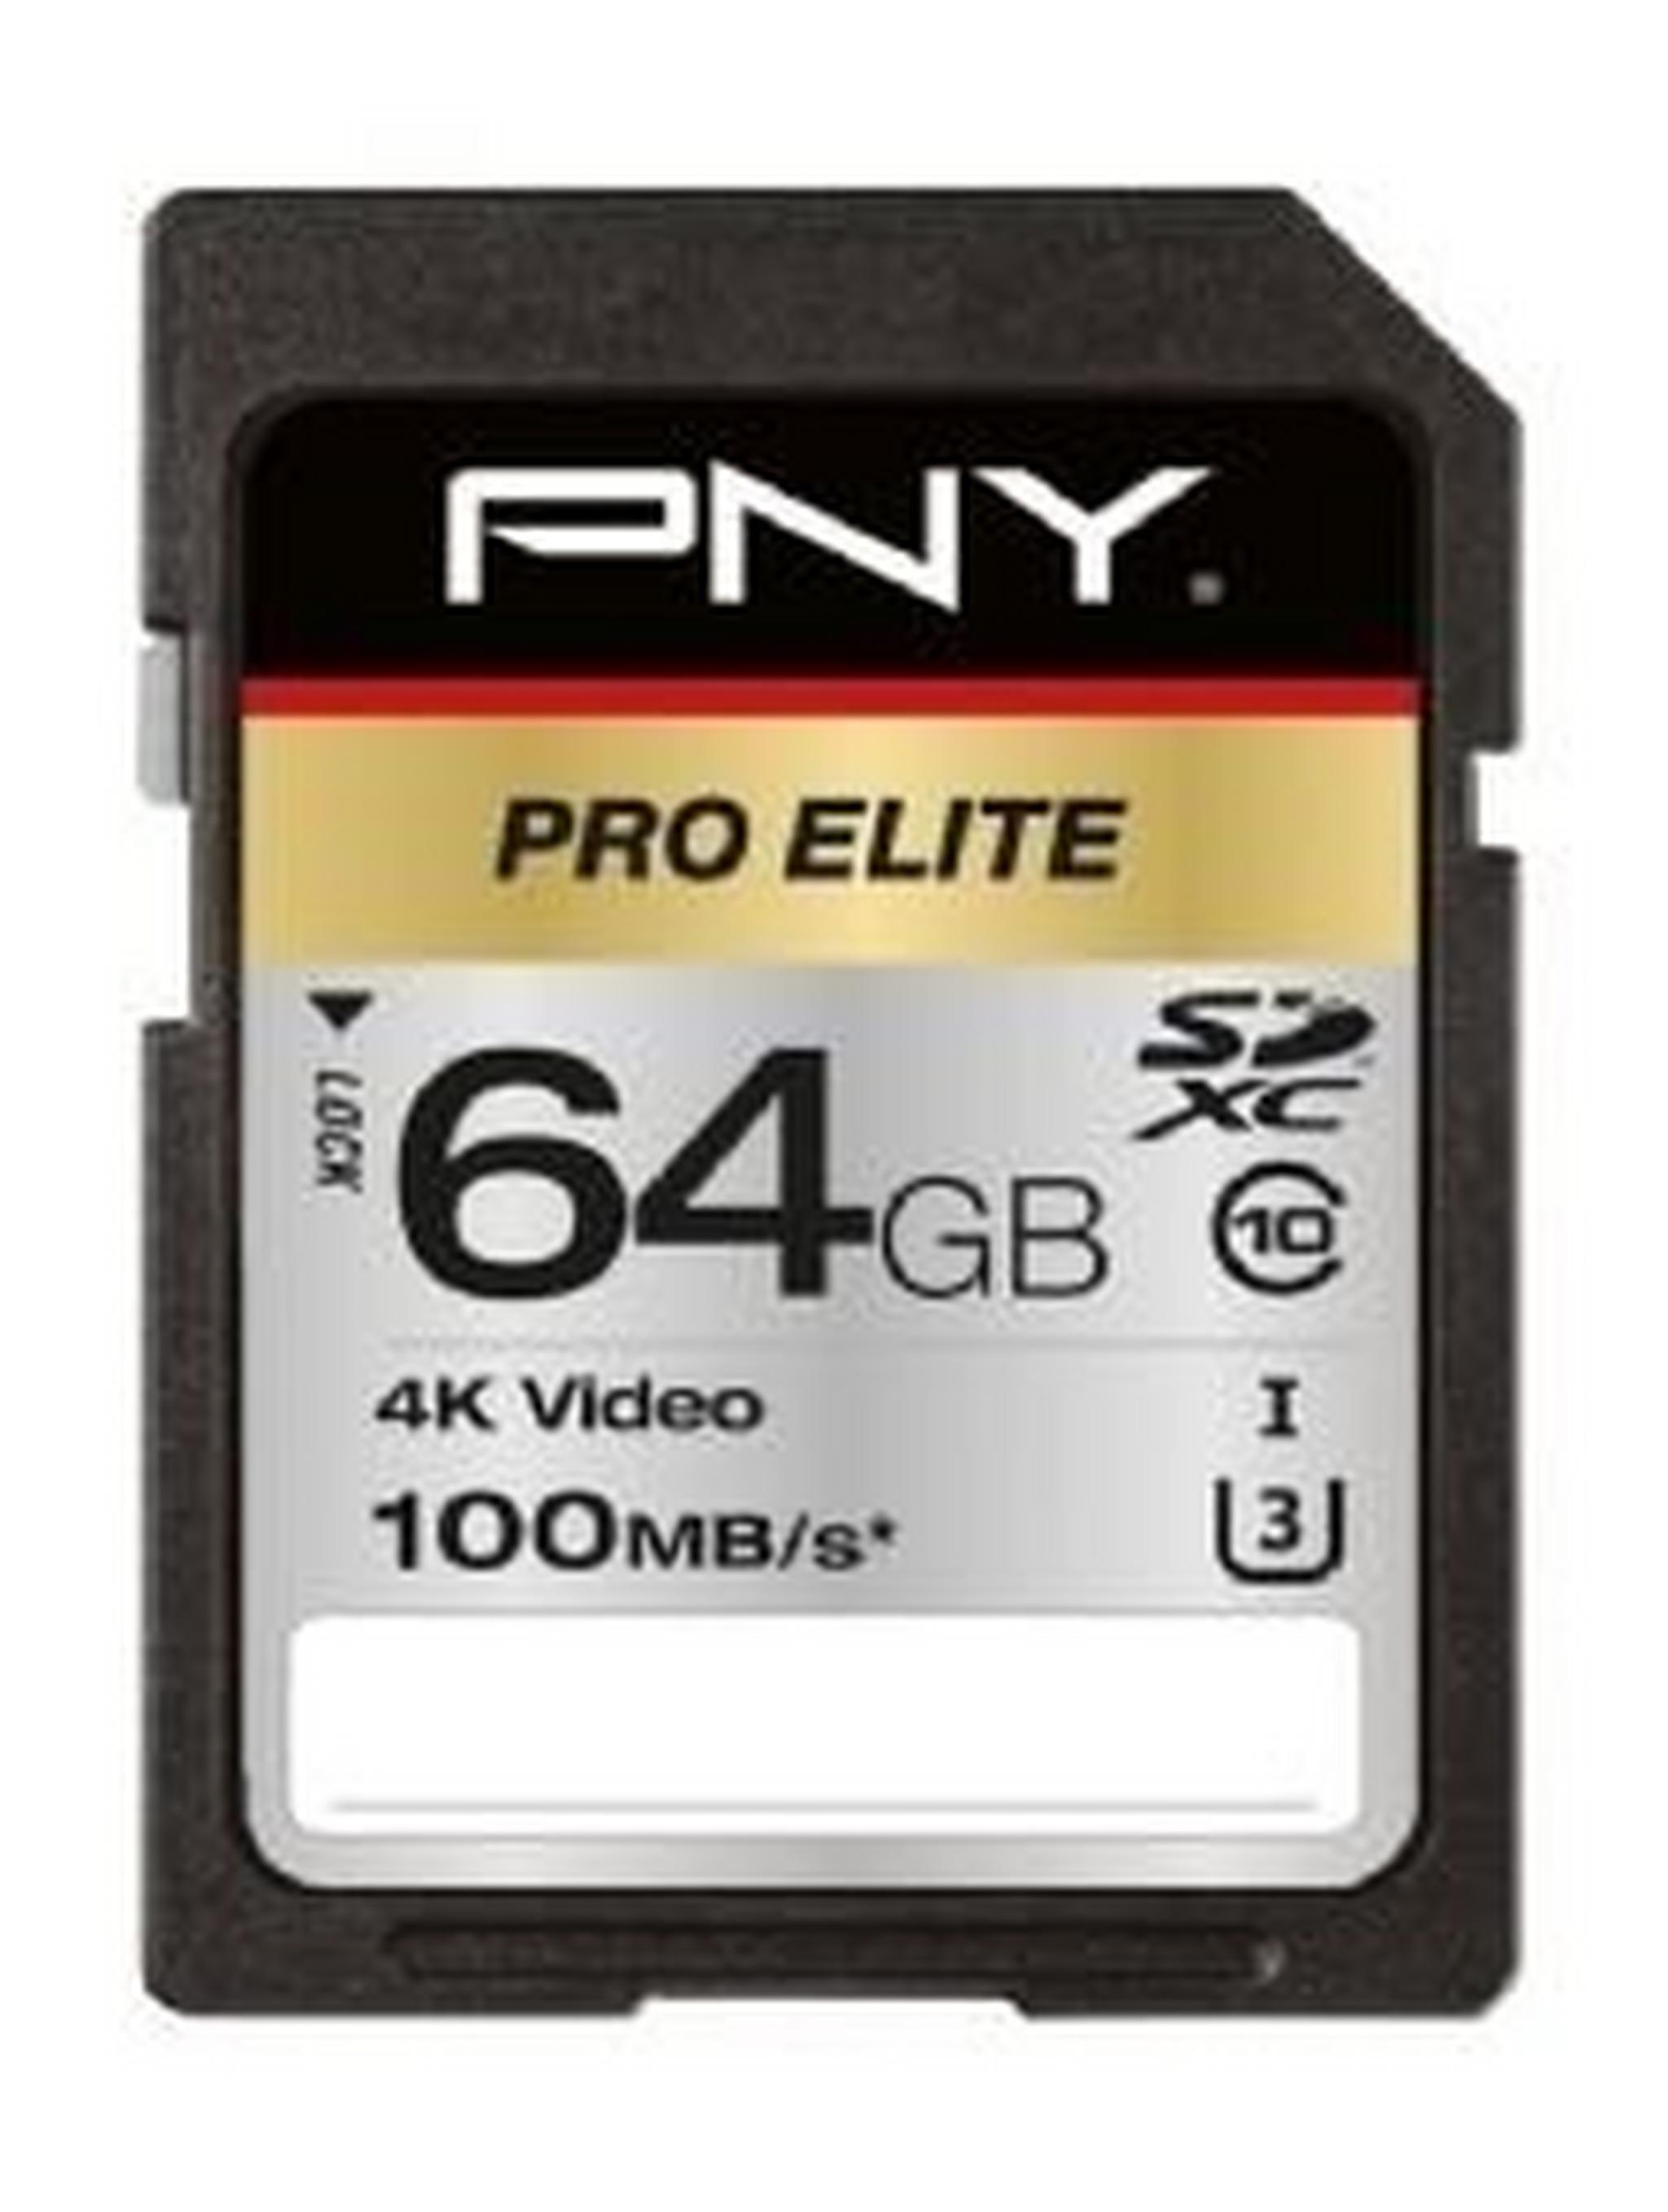 Pny Pro Elite Class 10 SDXC Memory Card - 64GB